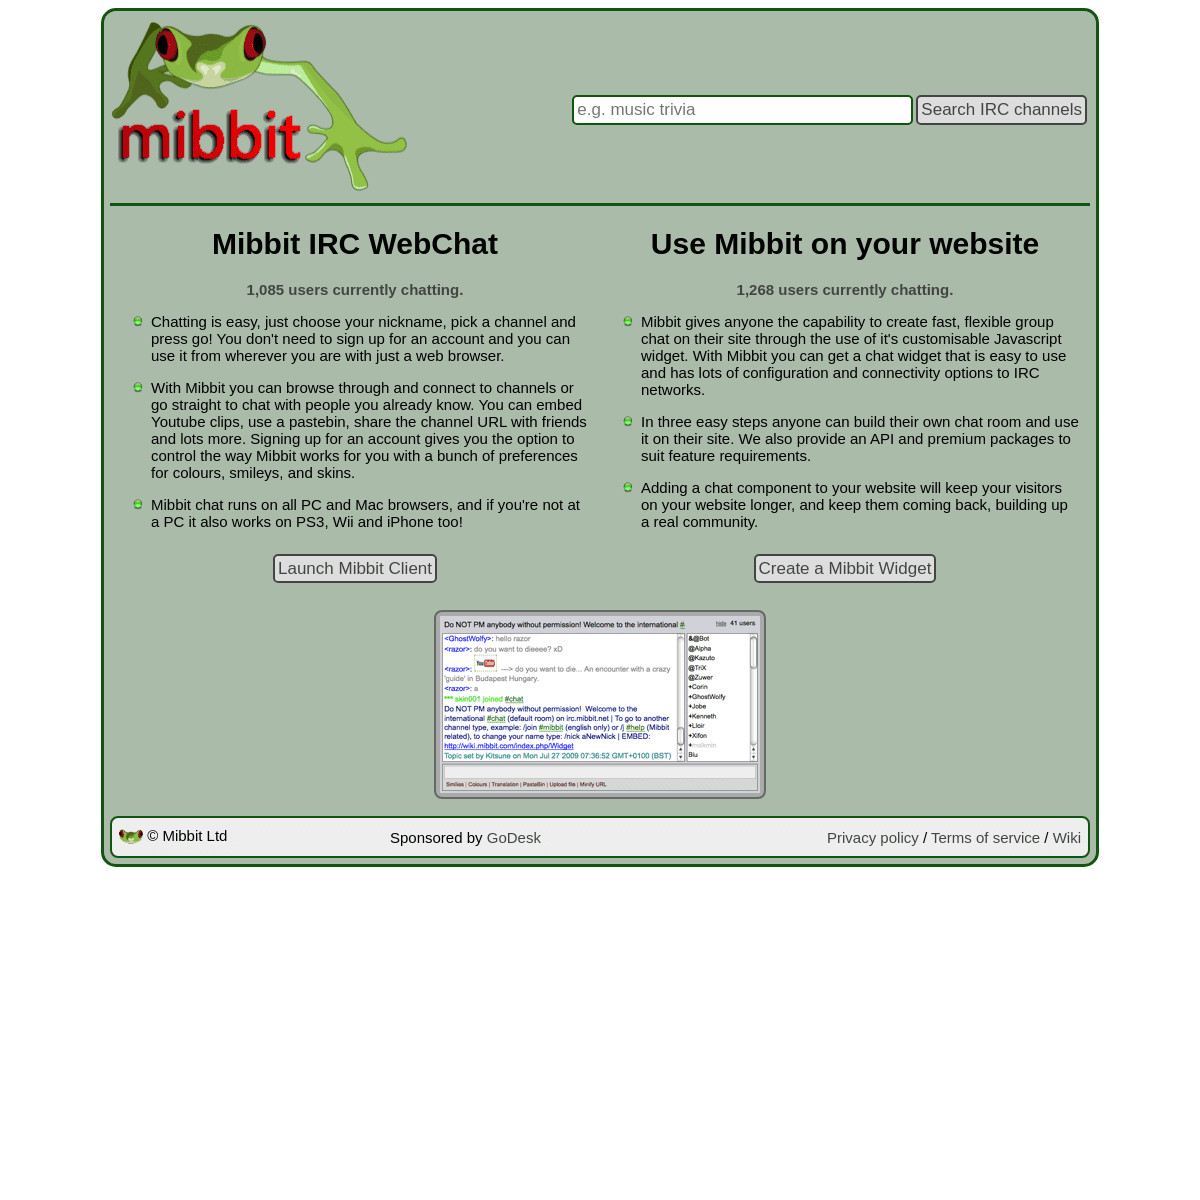 A complete backup of https://mibbit.com